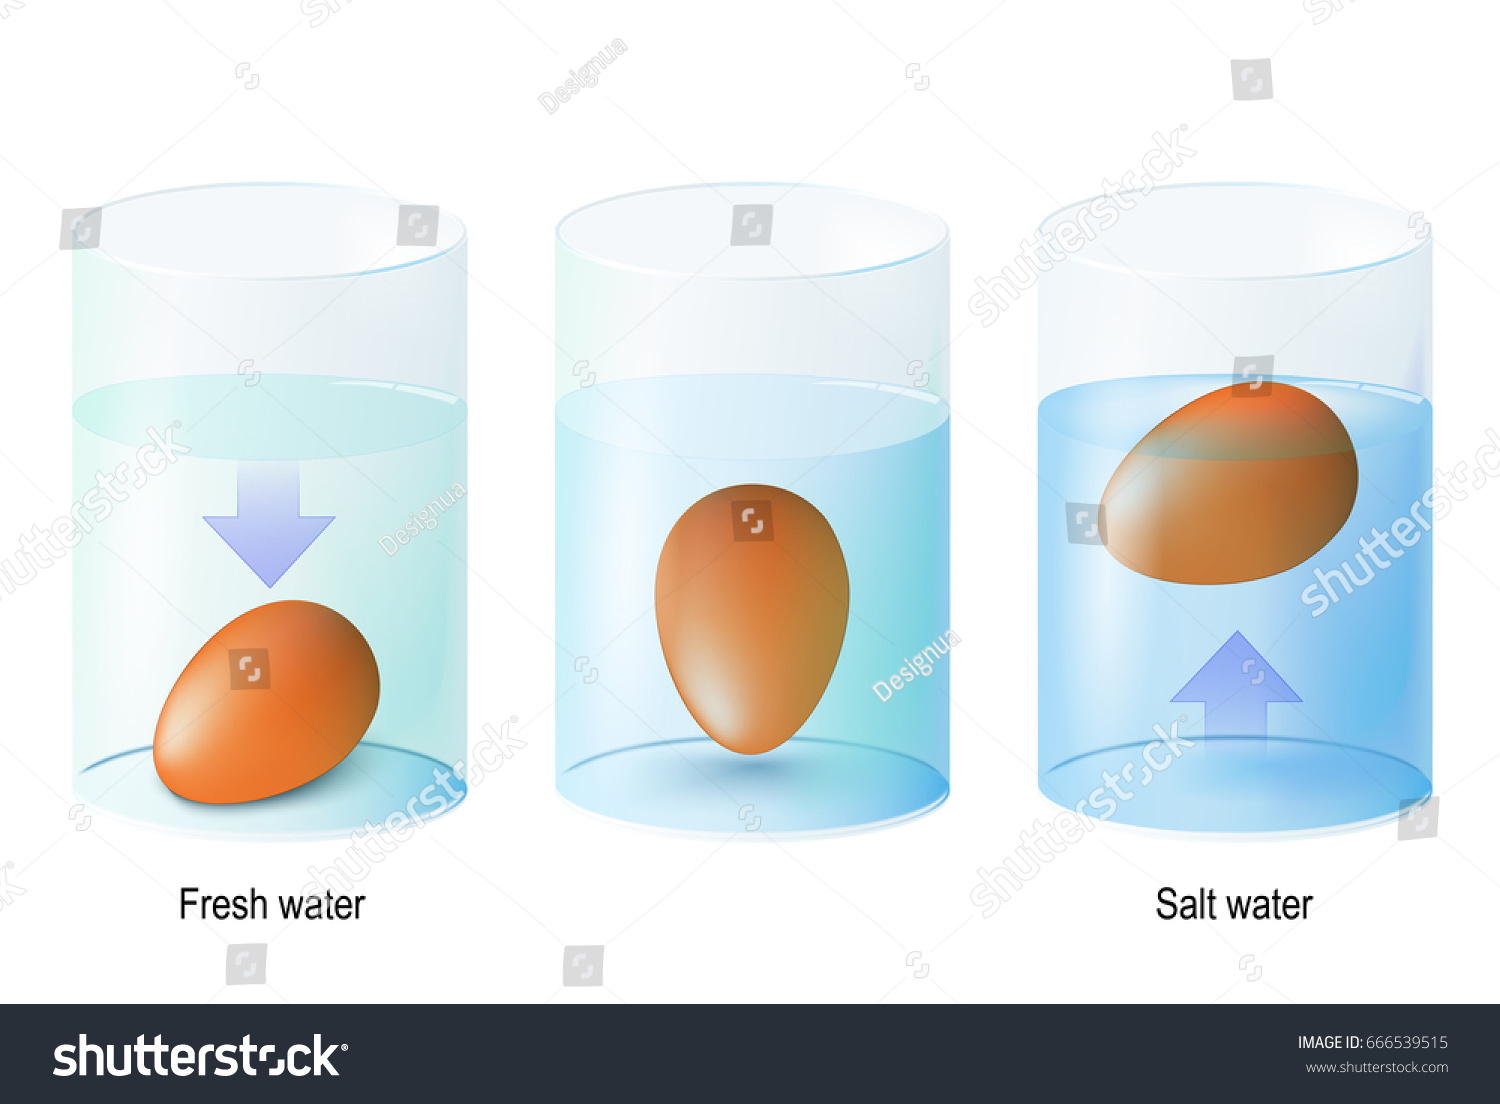 Test eggs for freshness by floating